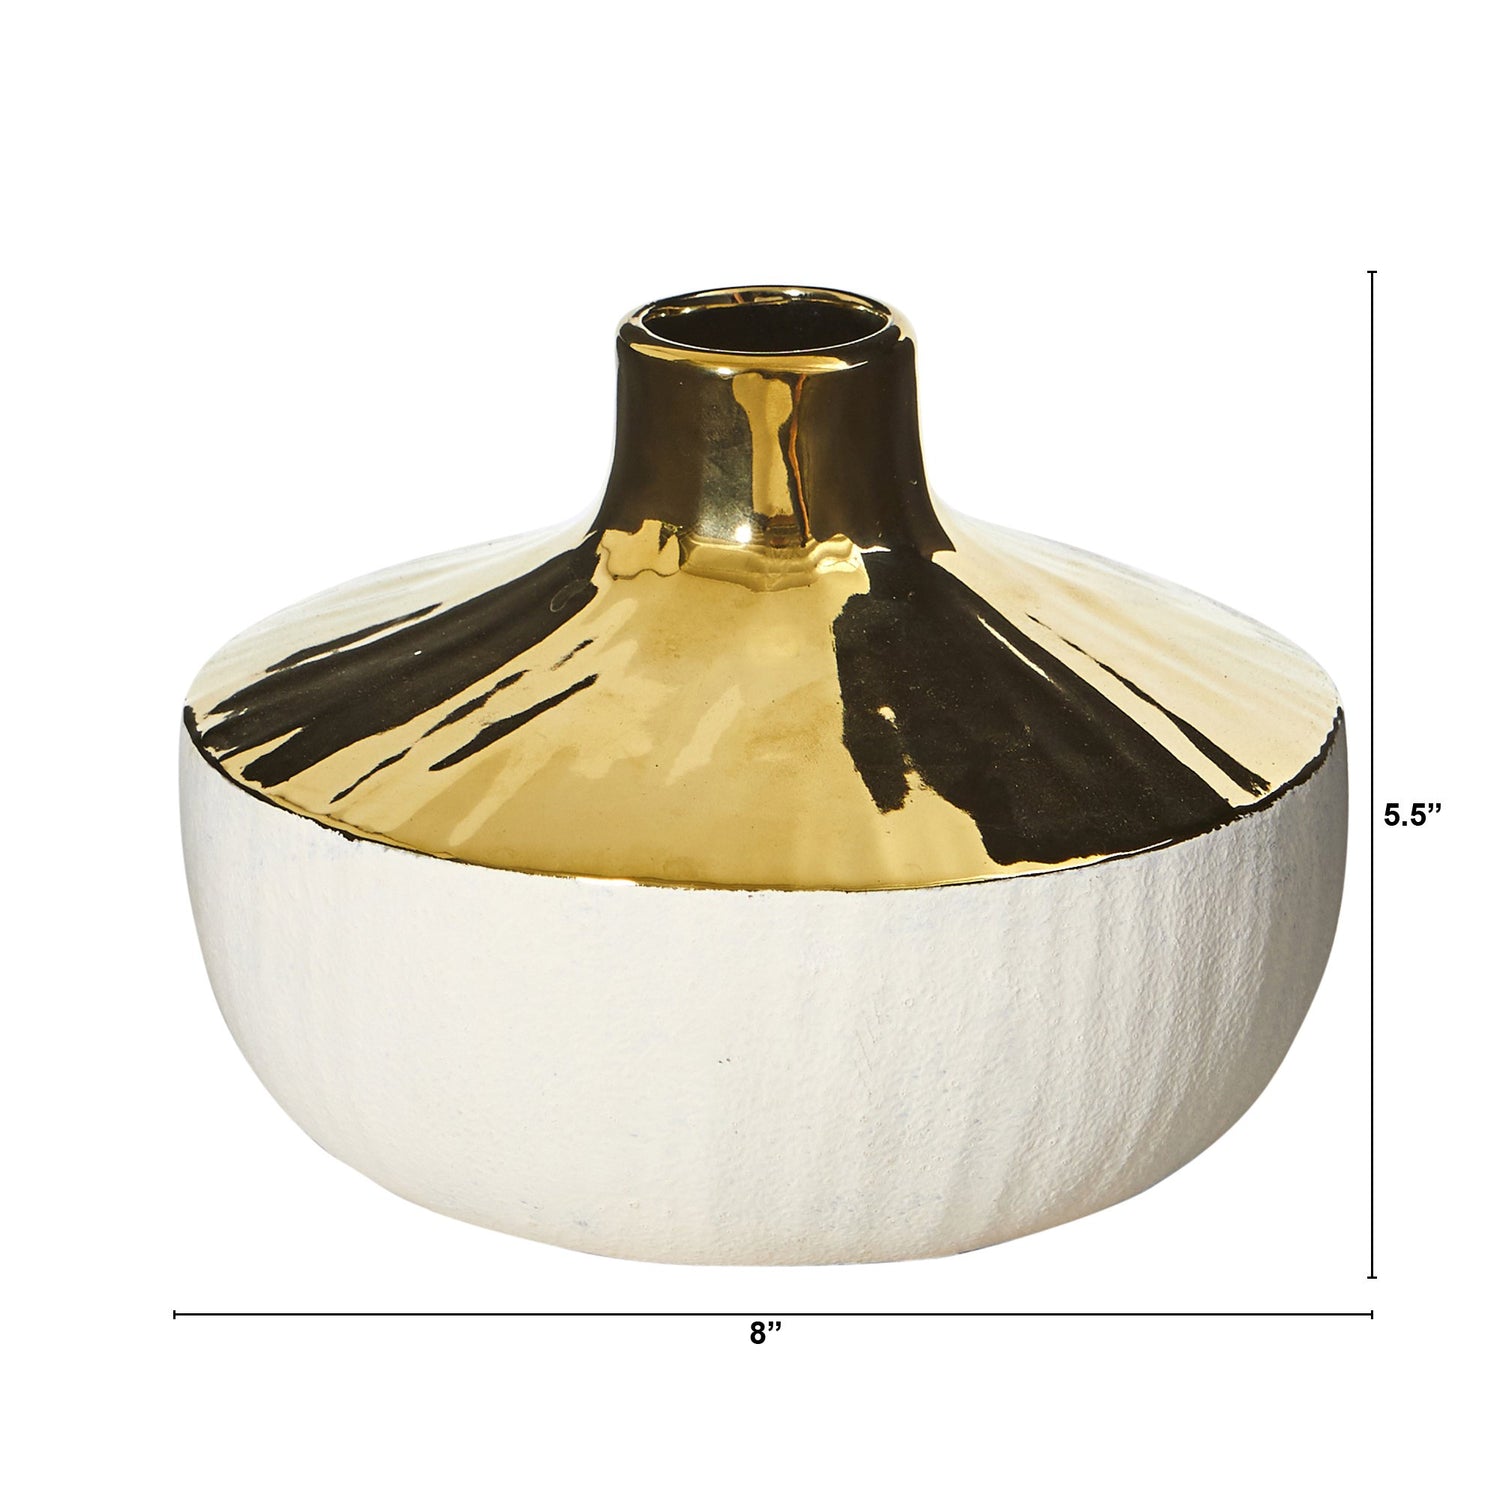 8” Elegance Ceramic Decorative Vase with Gold Accents